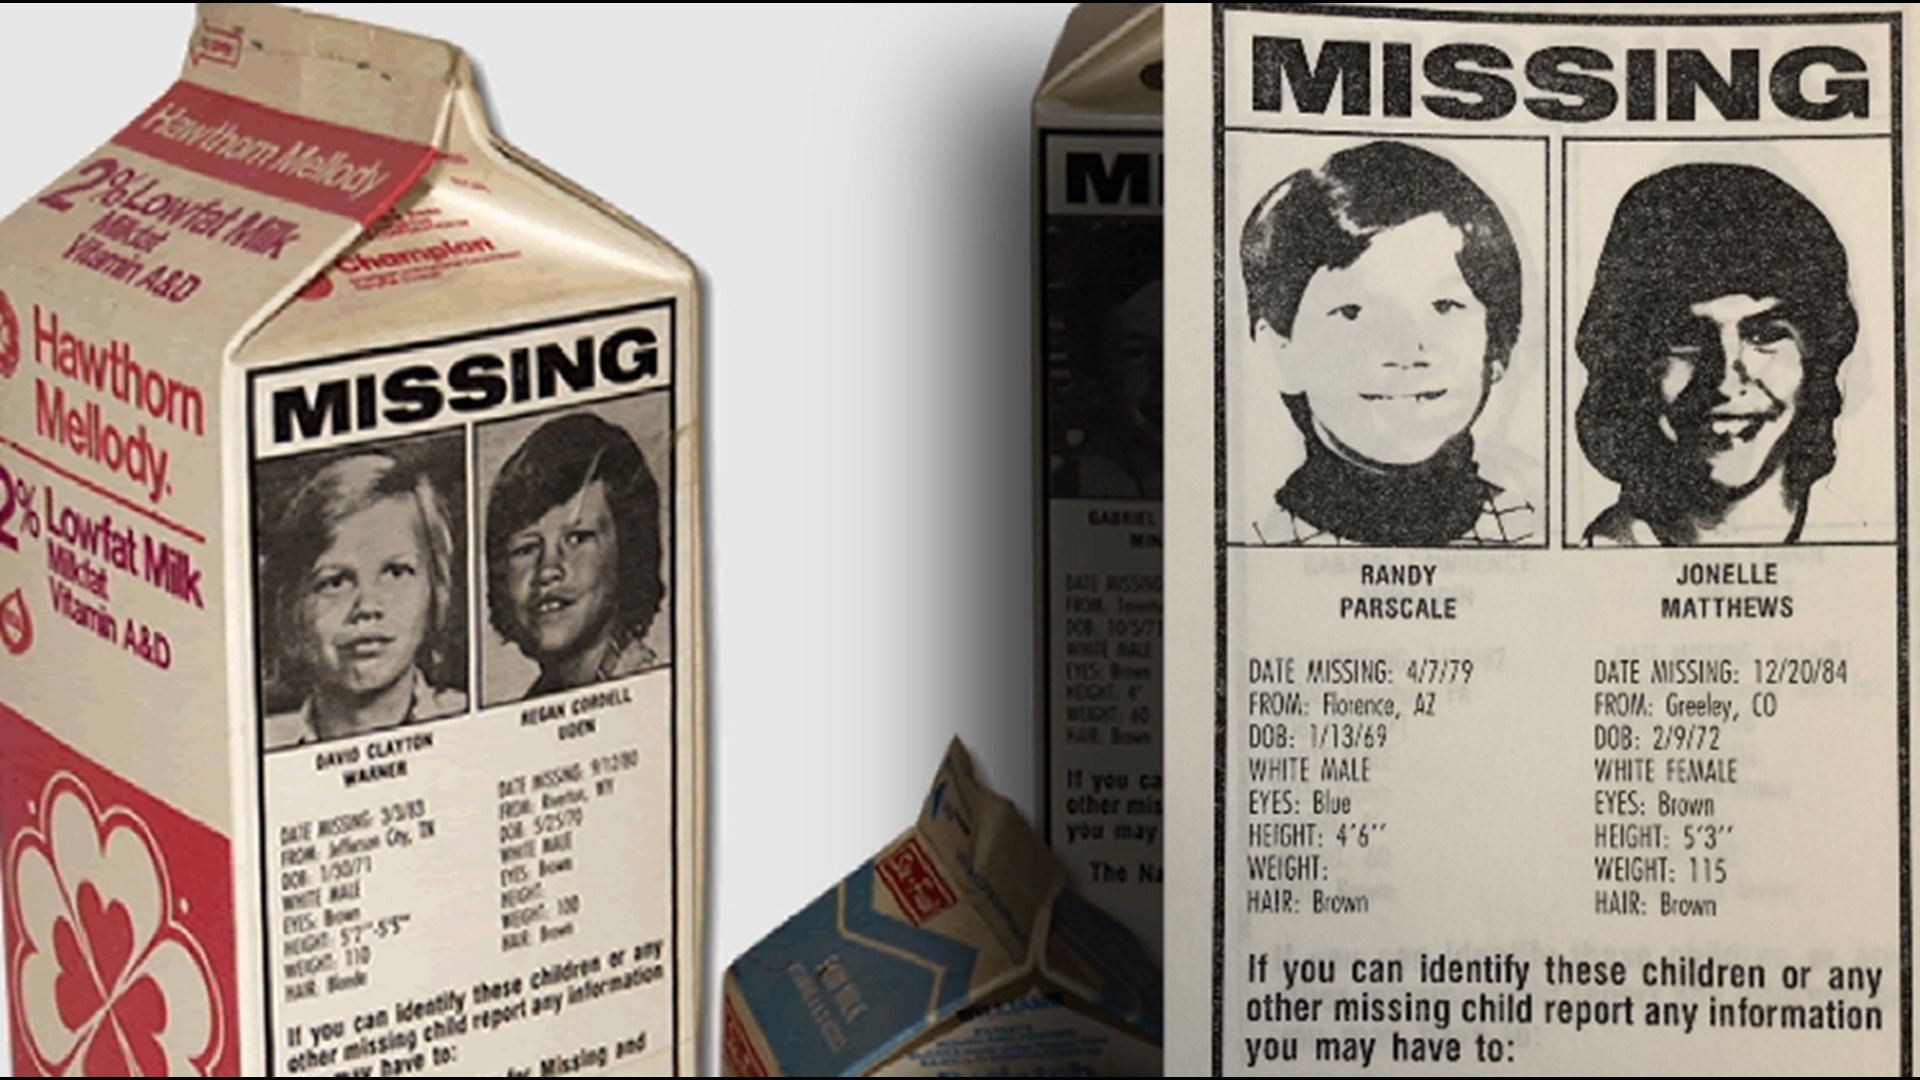 jonelle-matthews-was-one-of-first-missing-kids-on-milk-cartons-9news